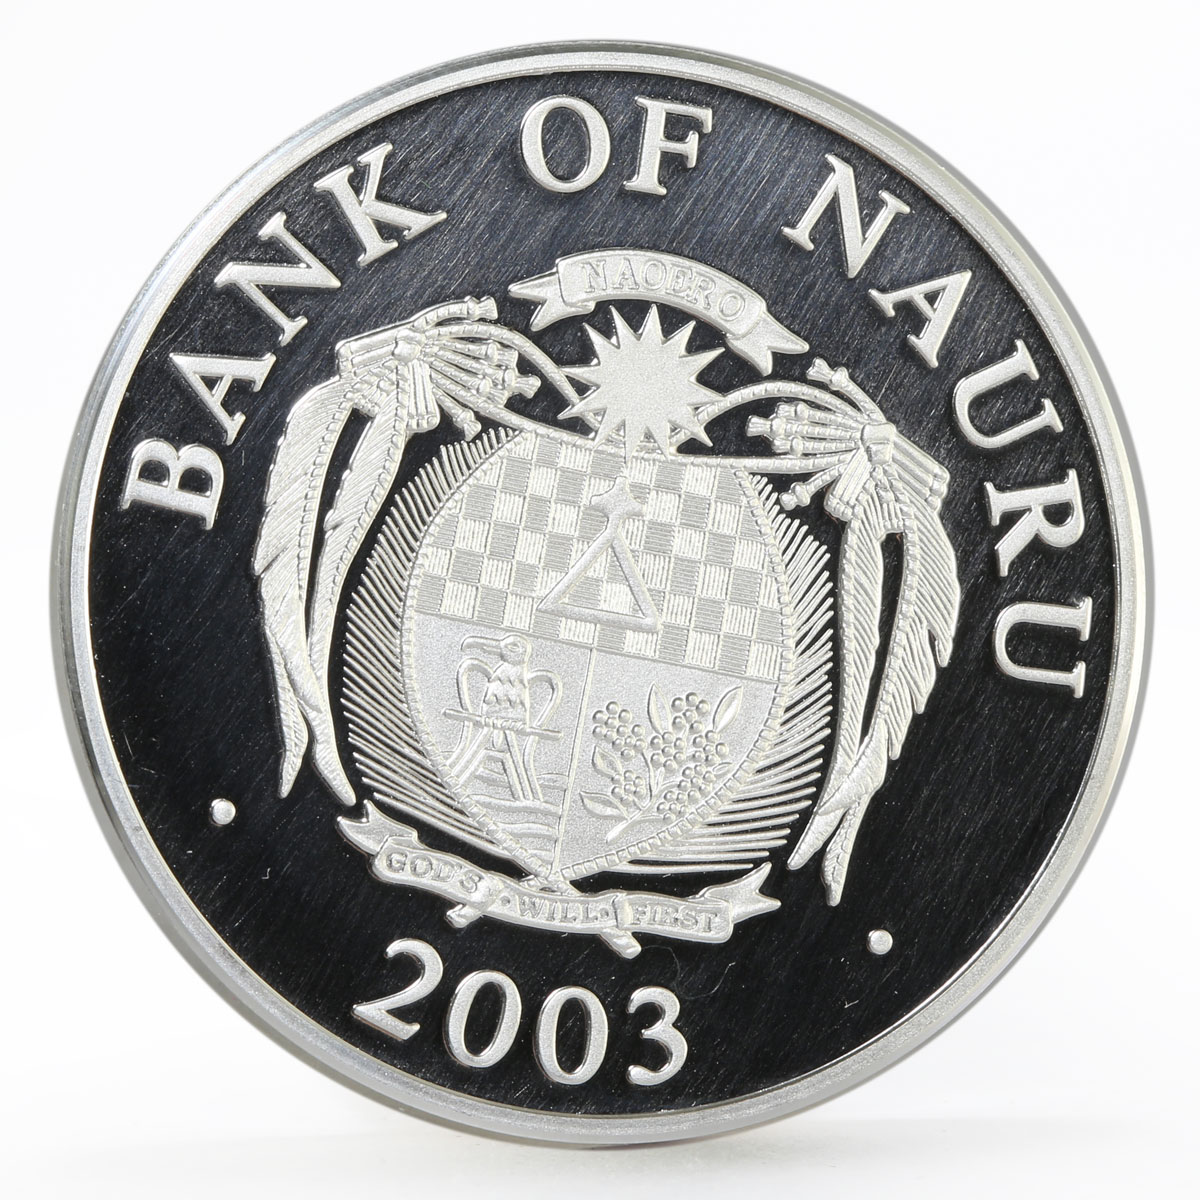 Nauru 10 dollars First Anniversary of the Euro in Circulation silver coin 2003